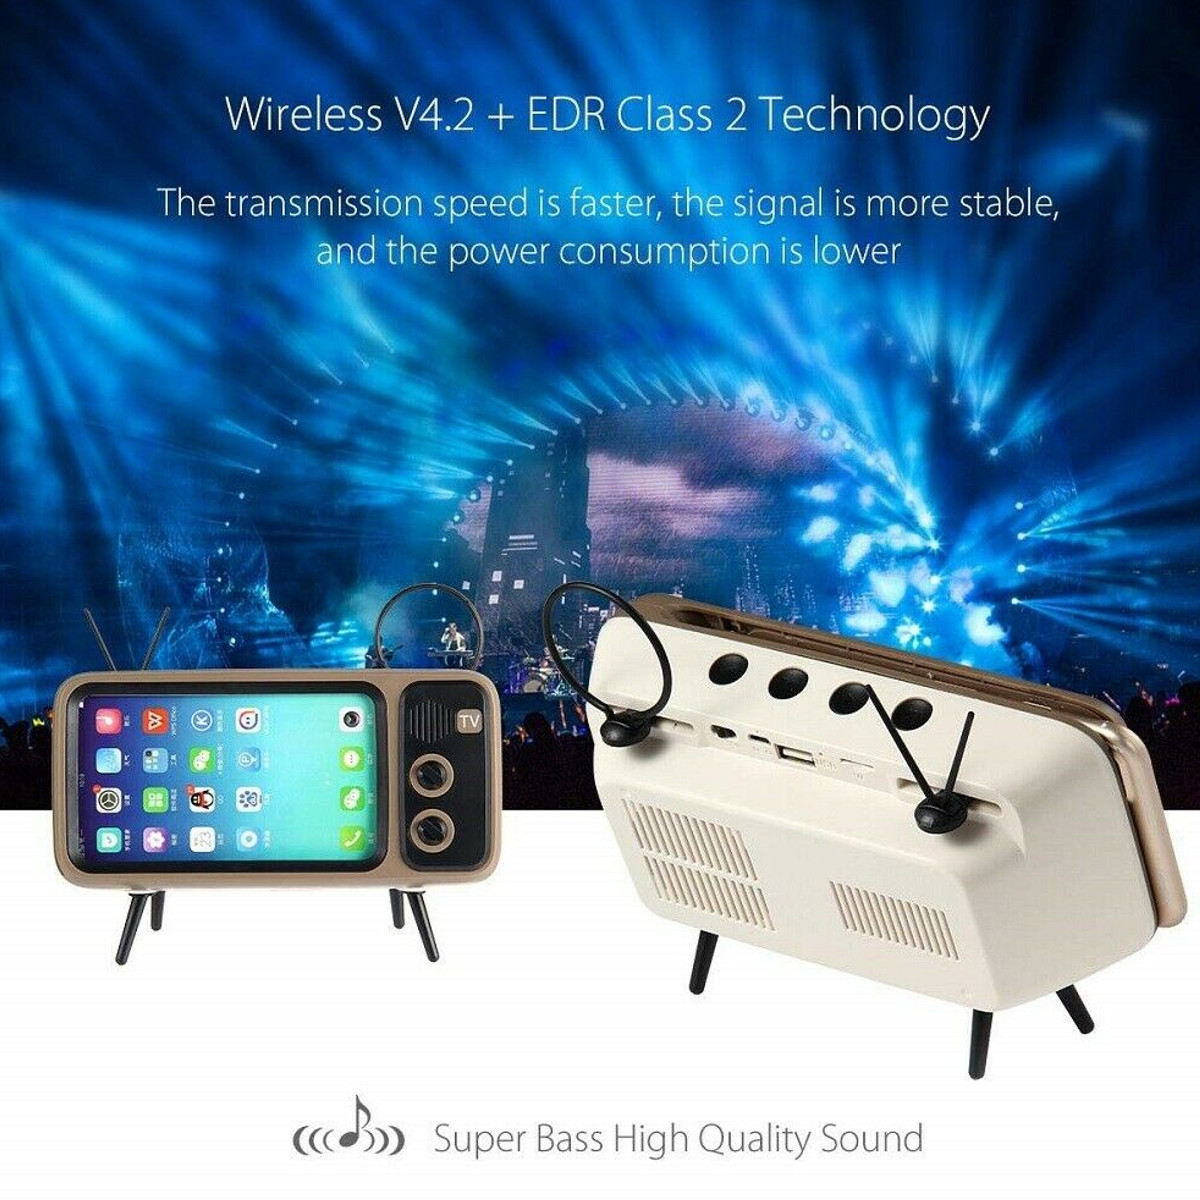 Bakeey-Mini-Retro-TV-Pattern-bluetooth-Speaker-Desktop-Cell-Phone-Stand-Holder-Lazy-Bracket-for-Mobi-1634628-3